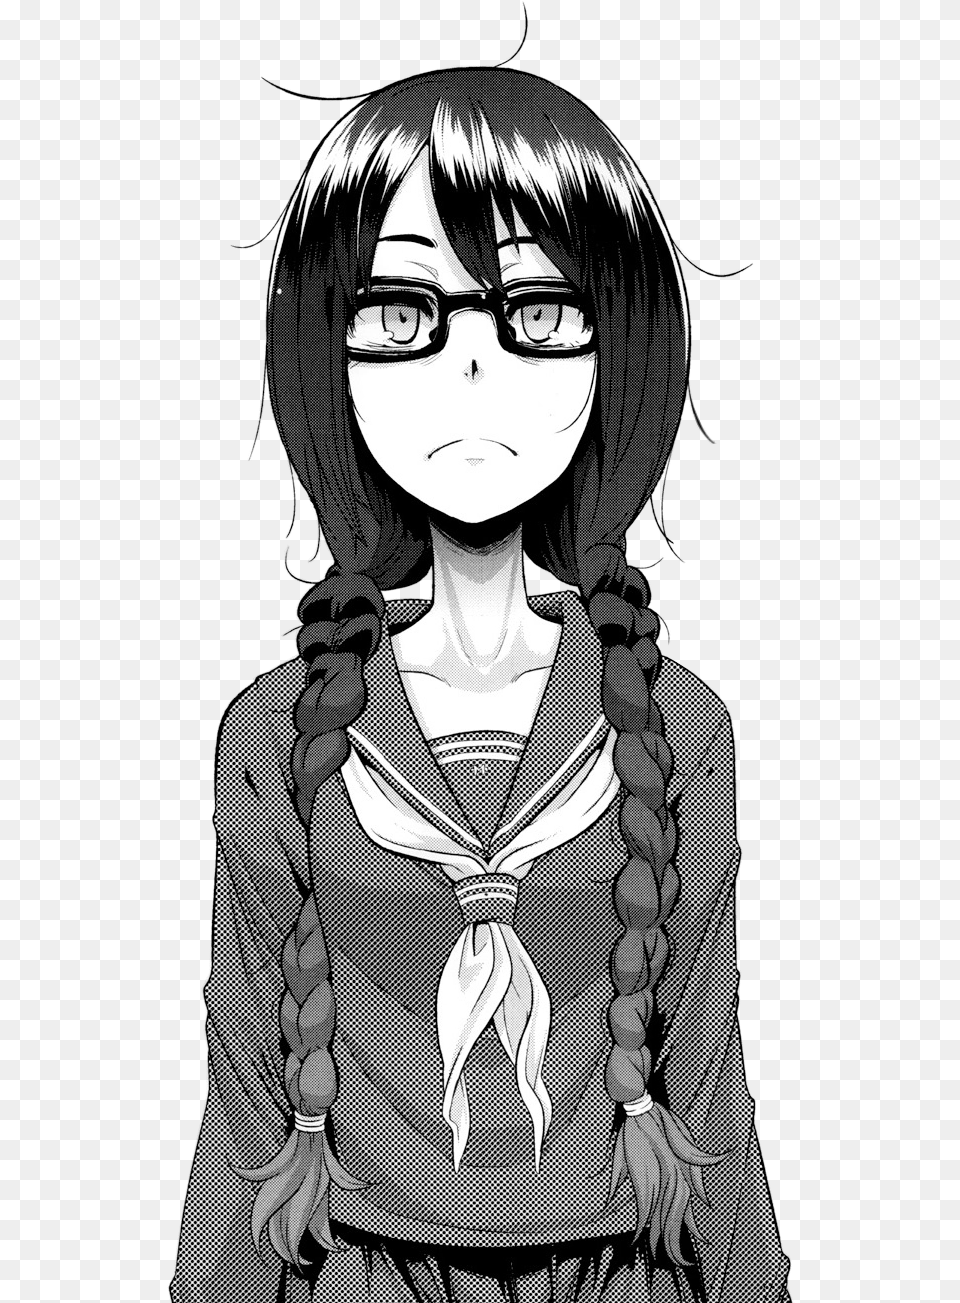 Download Tsuyu Is The Girl From Emergence Anime Metamorphosis Manga Meme, Woman, Publication, Female, Comics Free Transparent Png